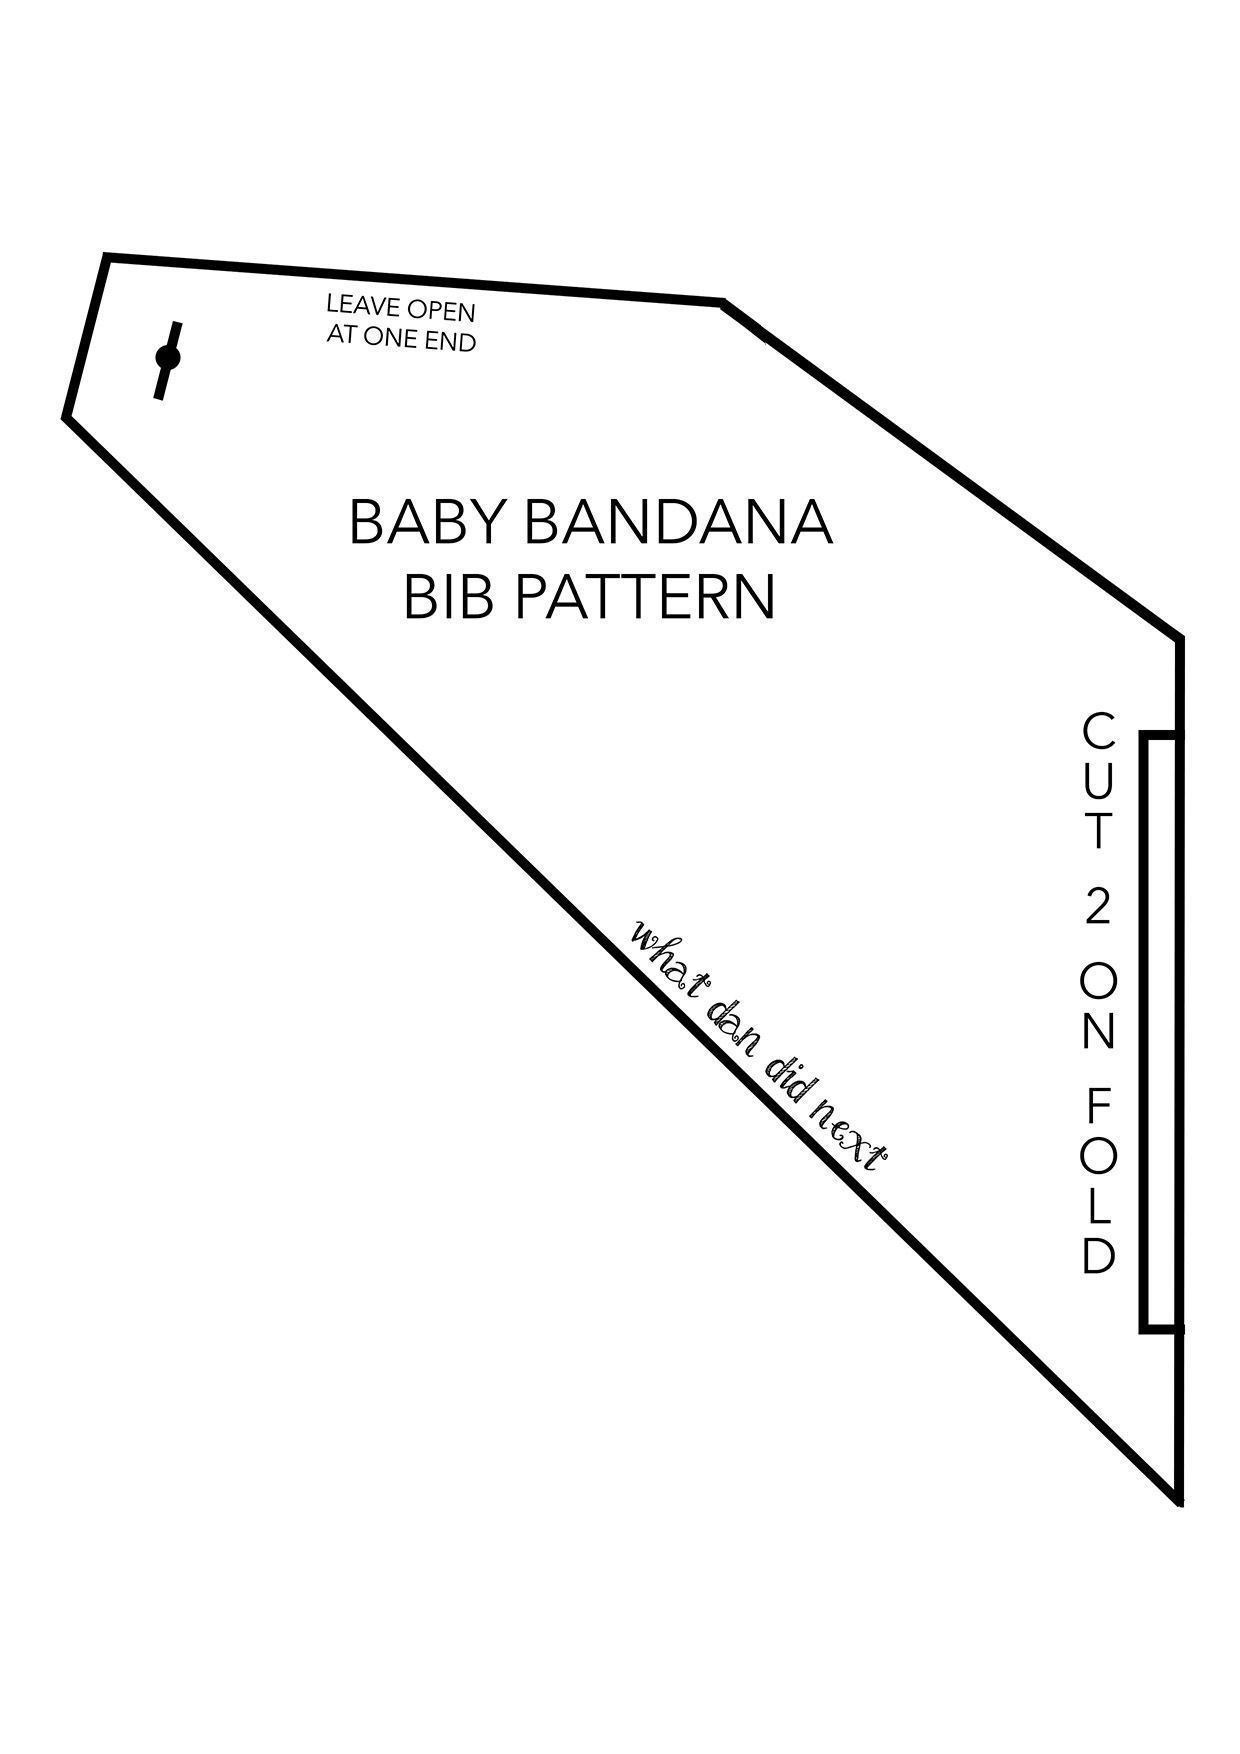 Bandana Bib Tutorial With Free Pdf Pattern In 2018 Baby Template - Free Printable Baby Bandana Bib Pattern